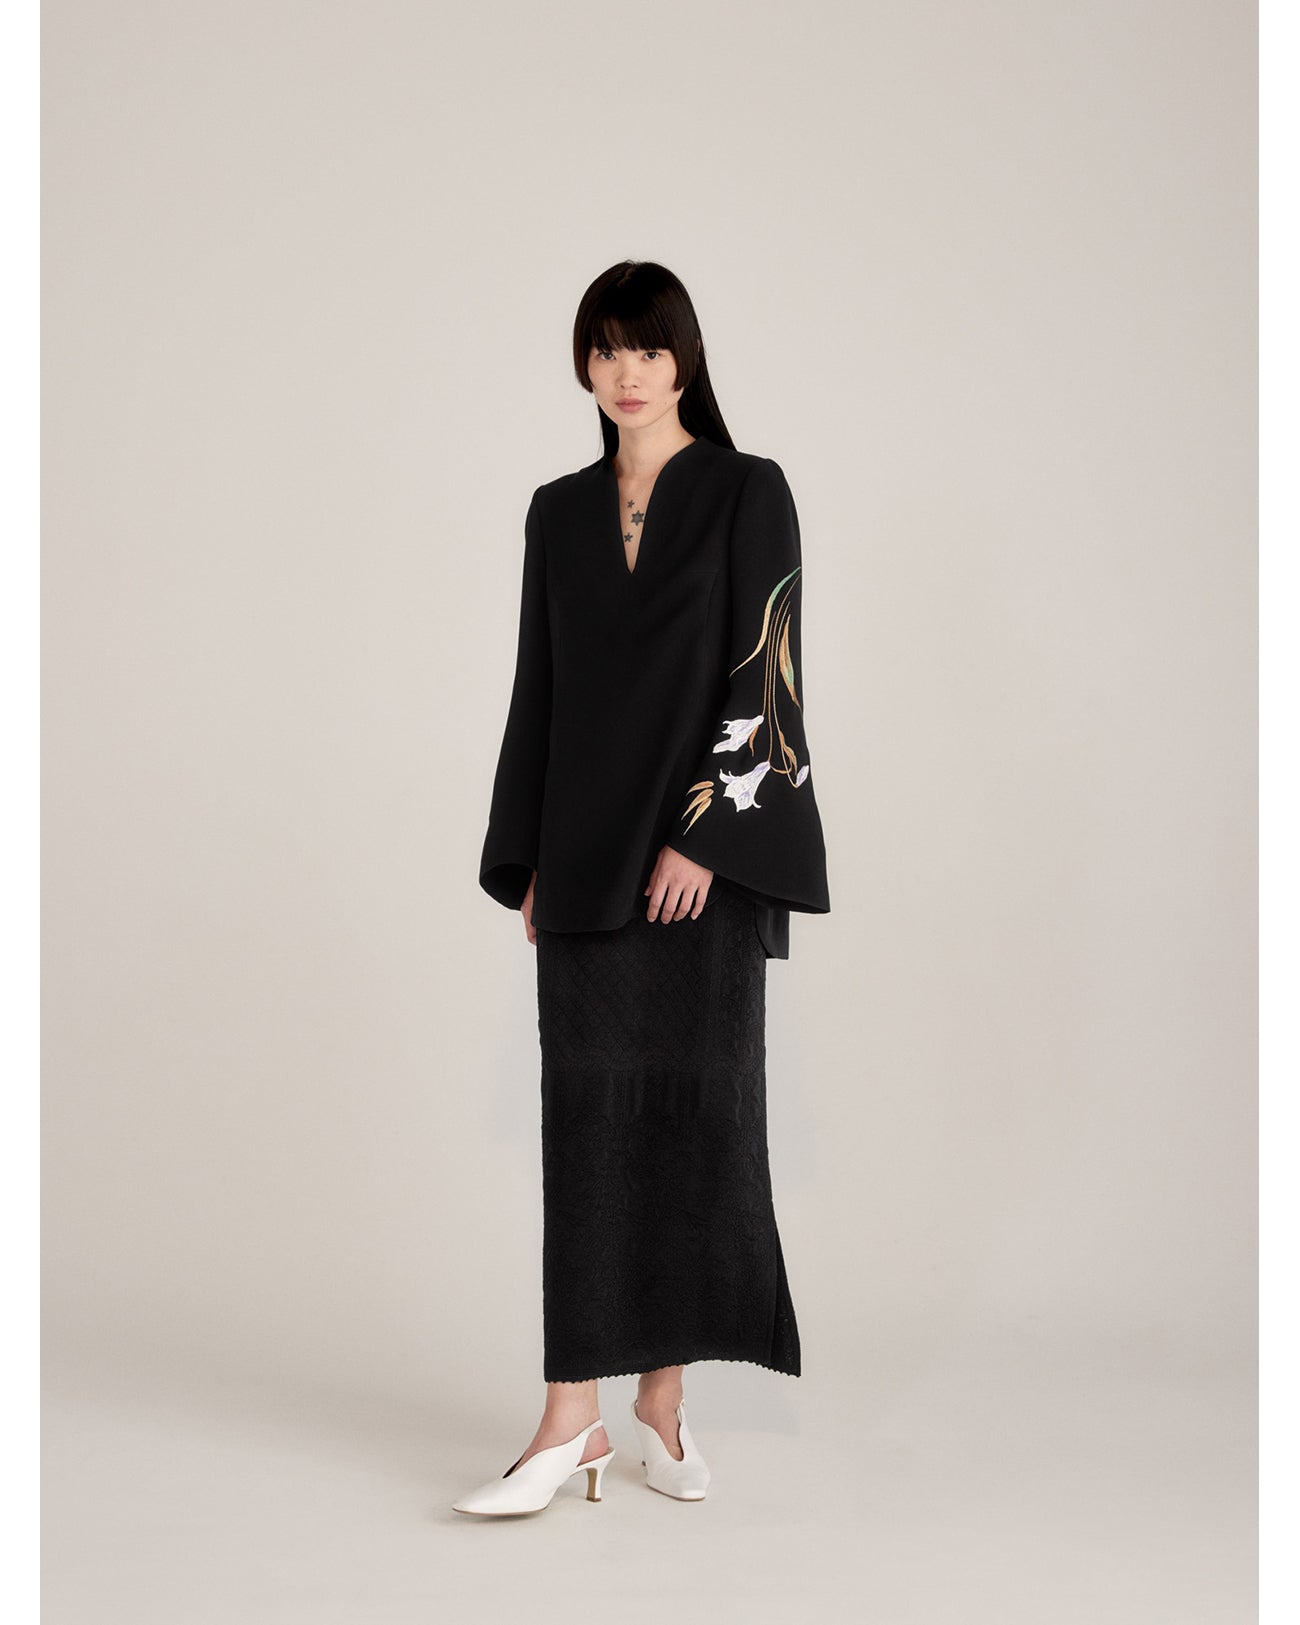 Floral Jacquard Knitted I-Line Skirt - black